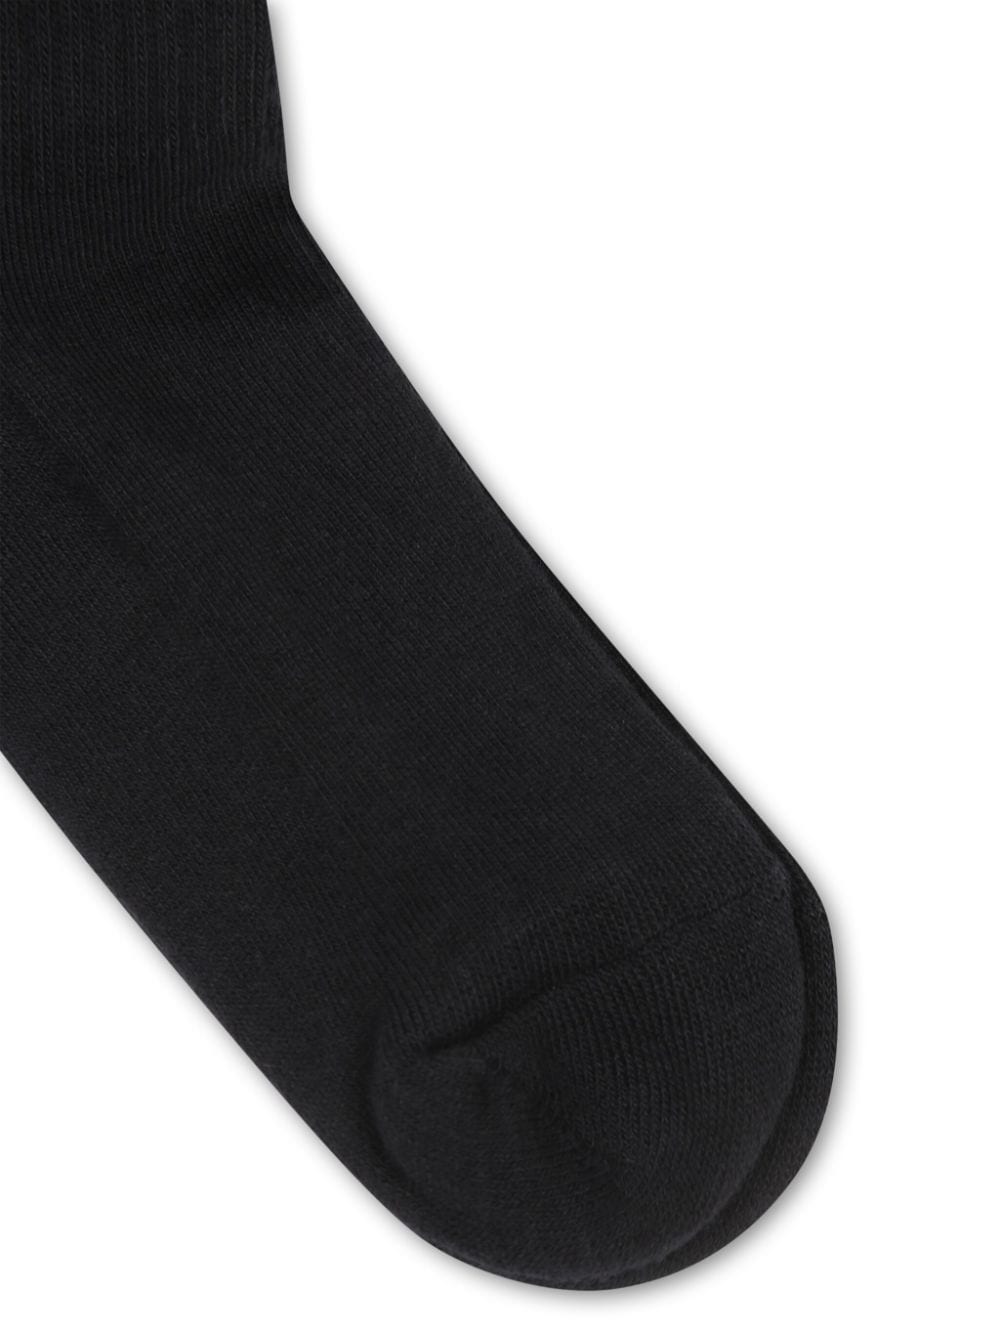 Unisex black cotton blend socks with logo